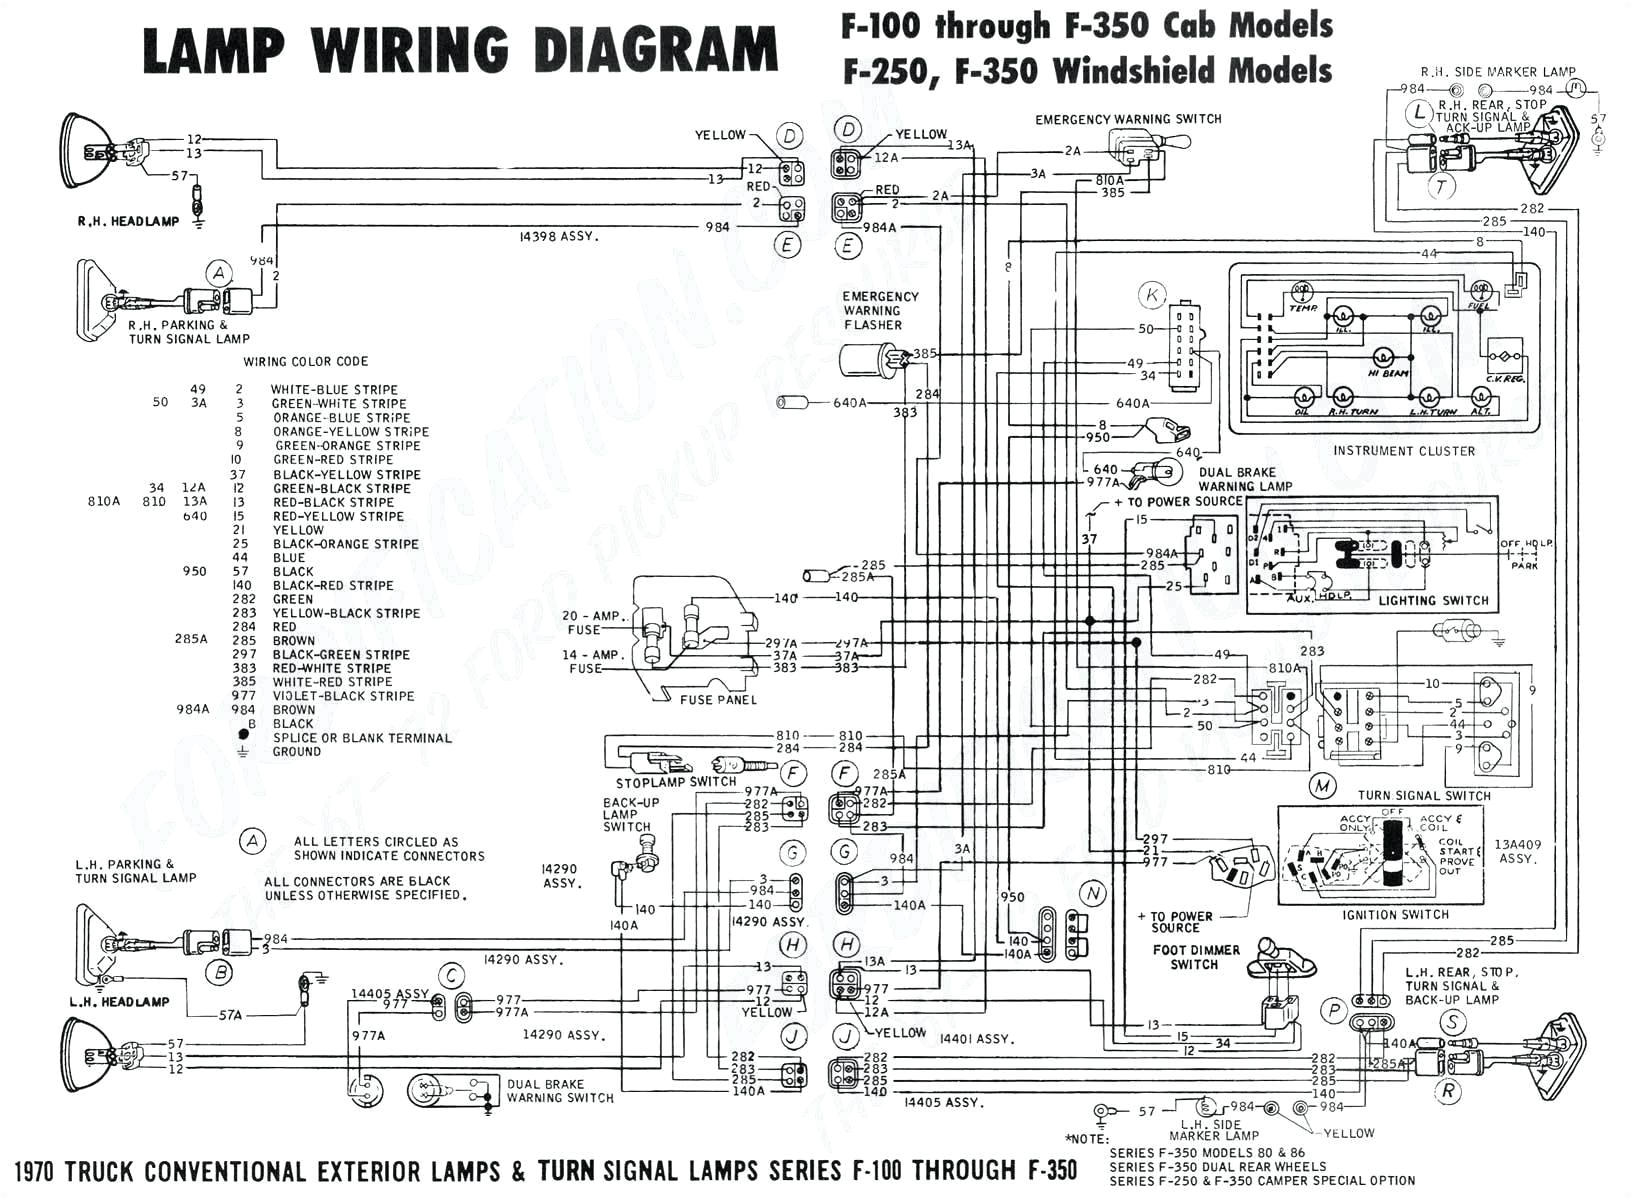 fuse box diagram 1986 ford f 250 crew cab truck wiring diagrams bib86 f350 fuse box